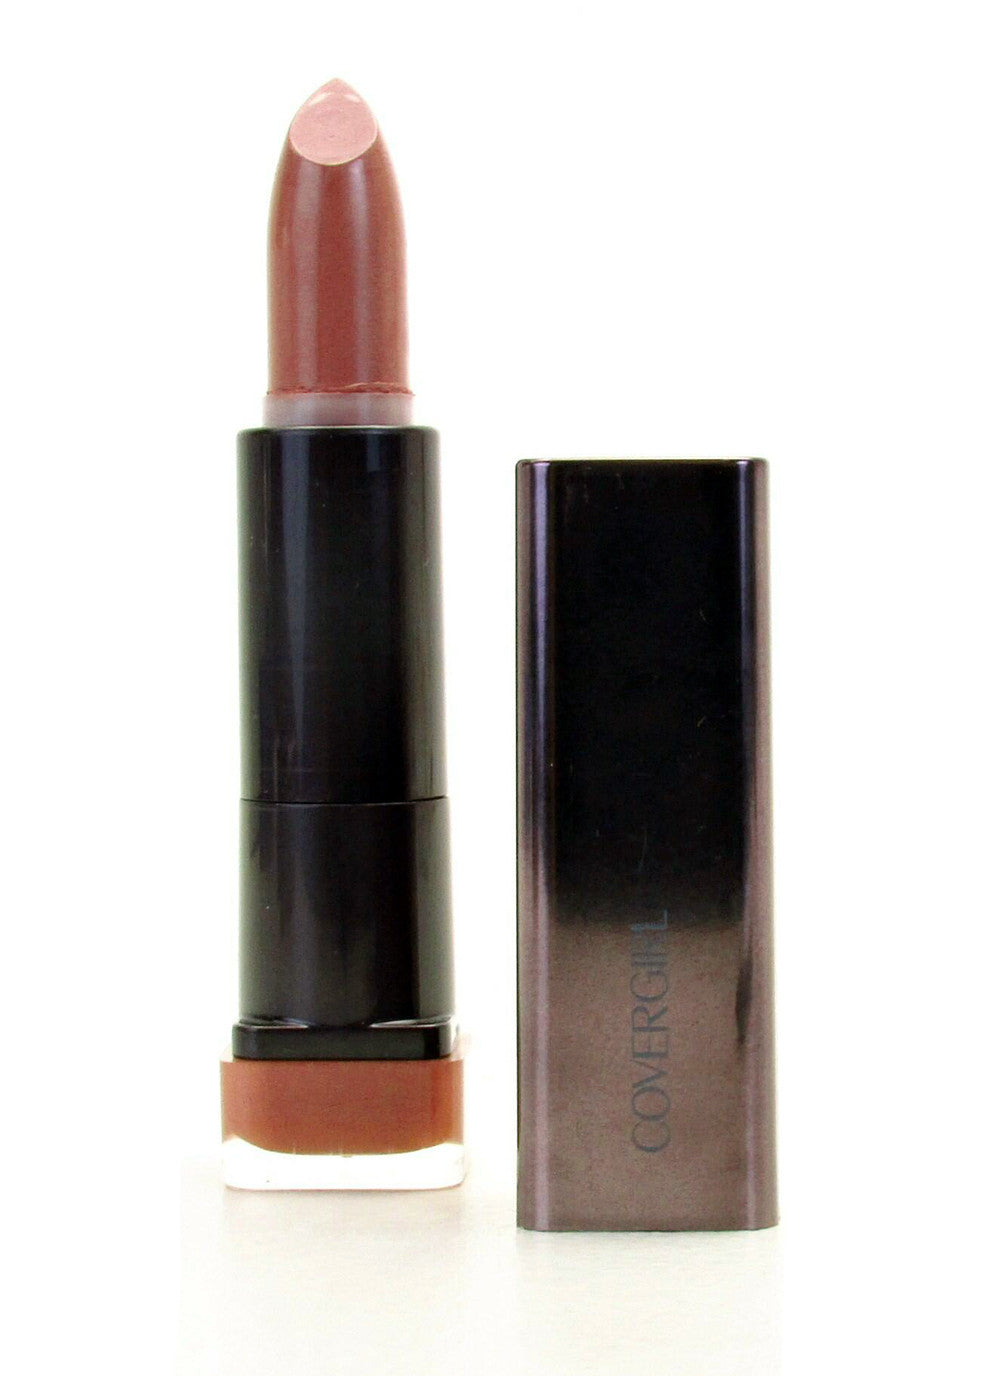 Covergirl Lip Perfection Lipstick #265 Romance